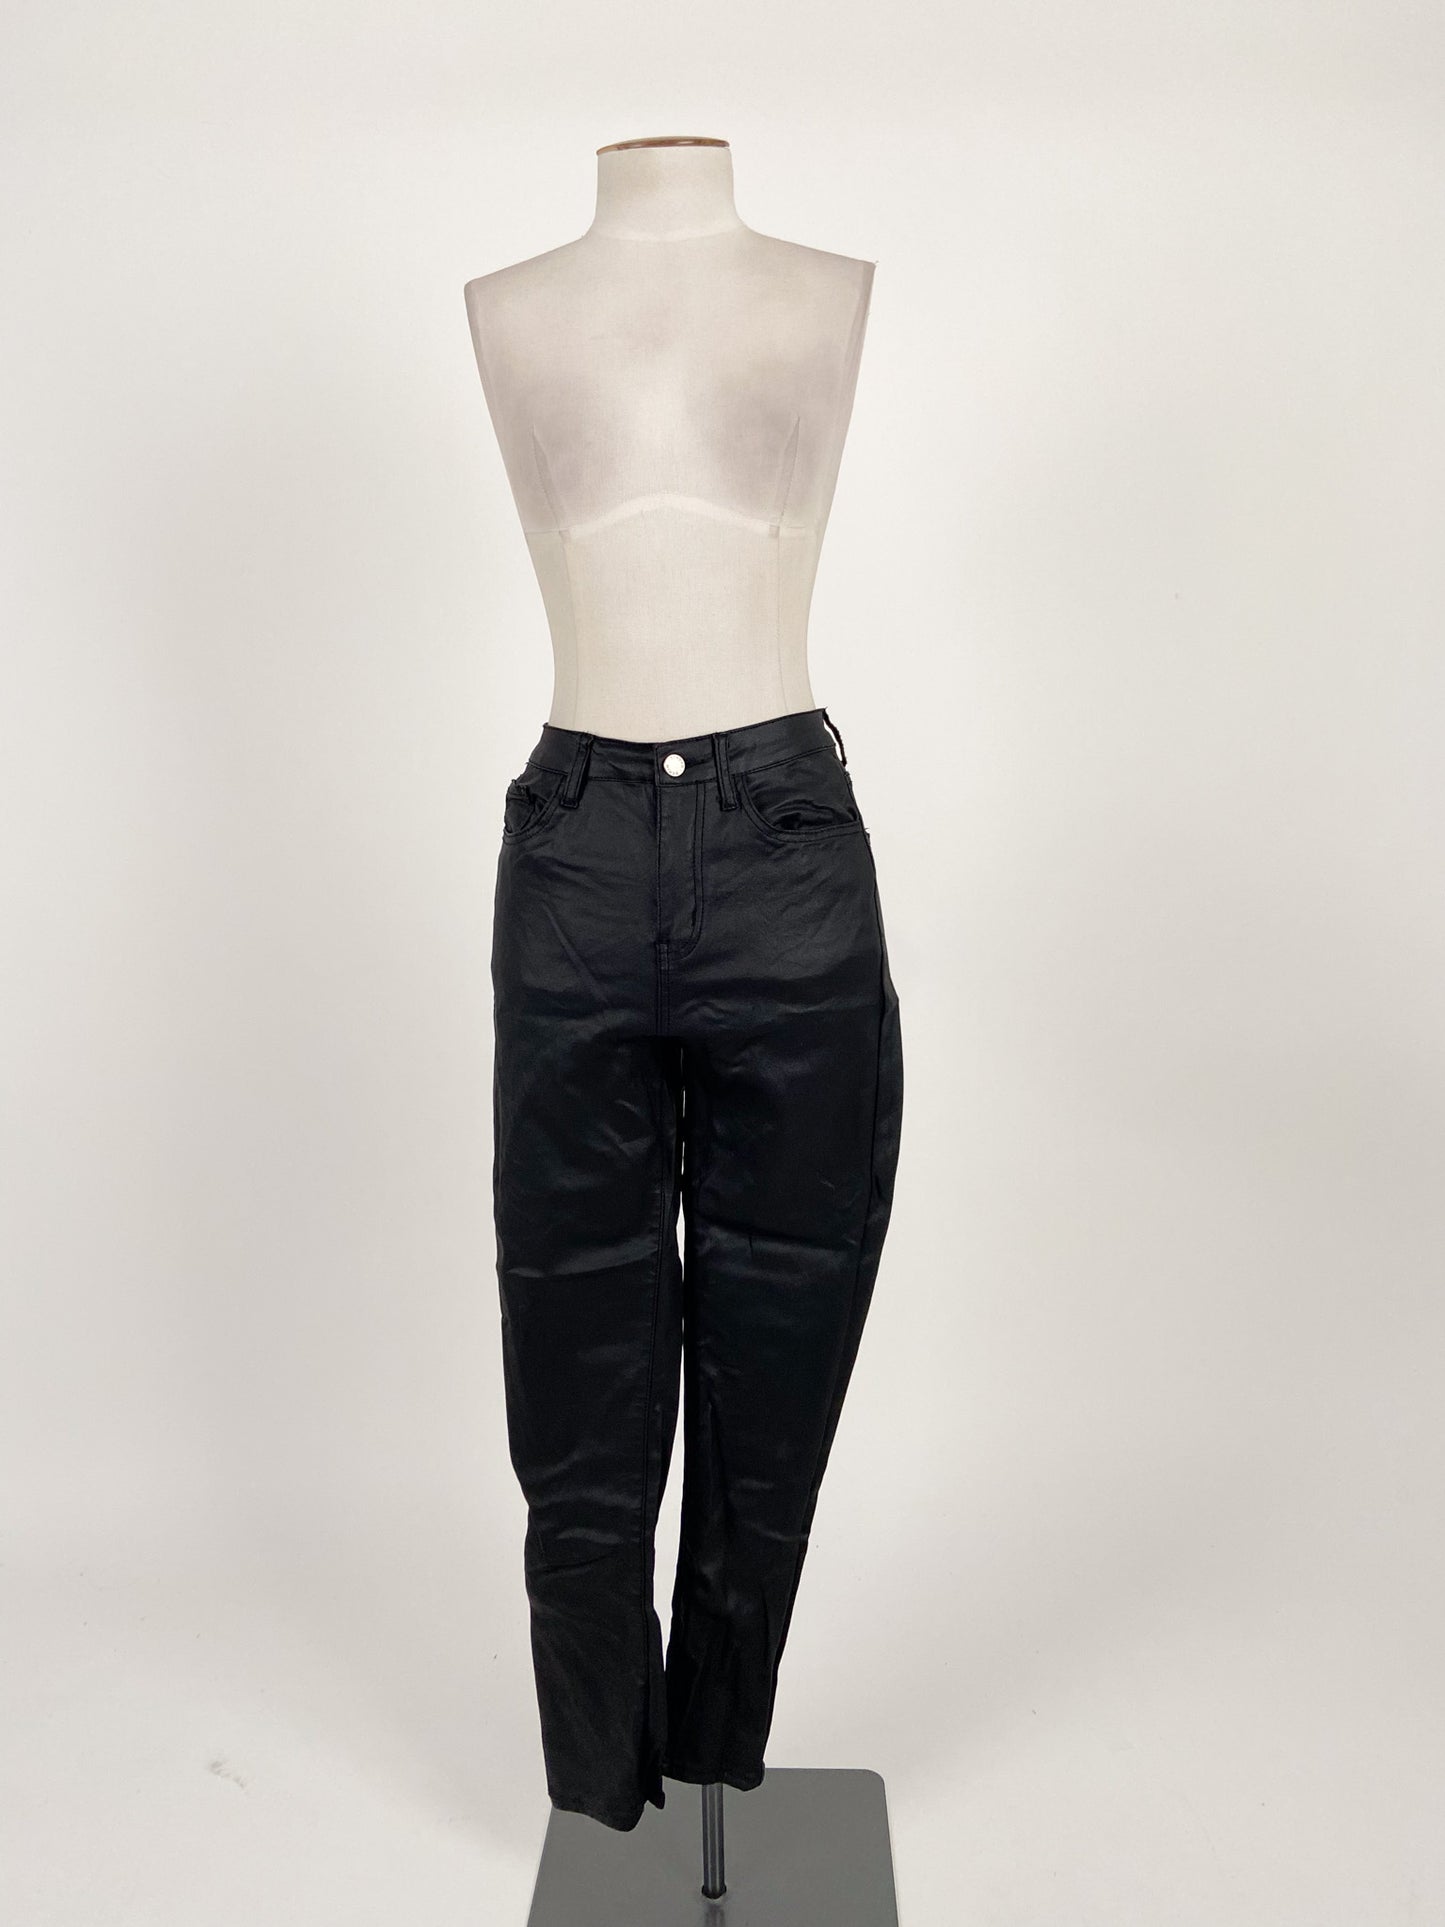 Stndrd Denim | Black Casual Jeans | Size 6